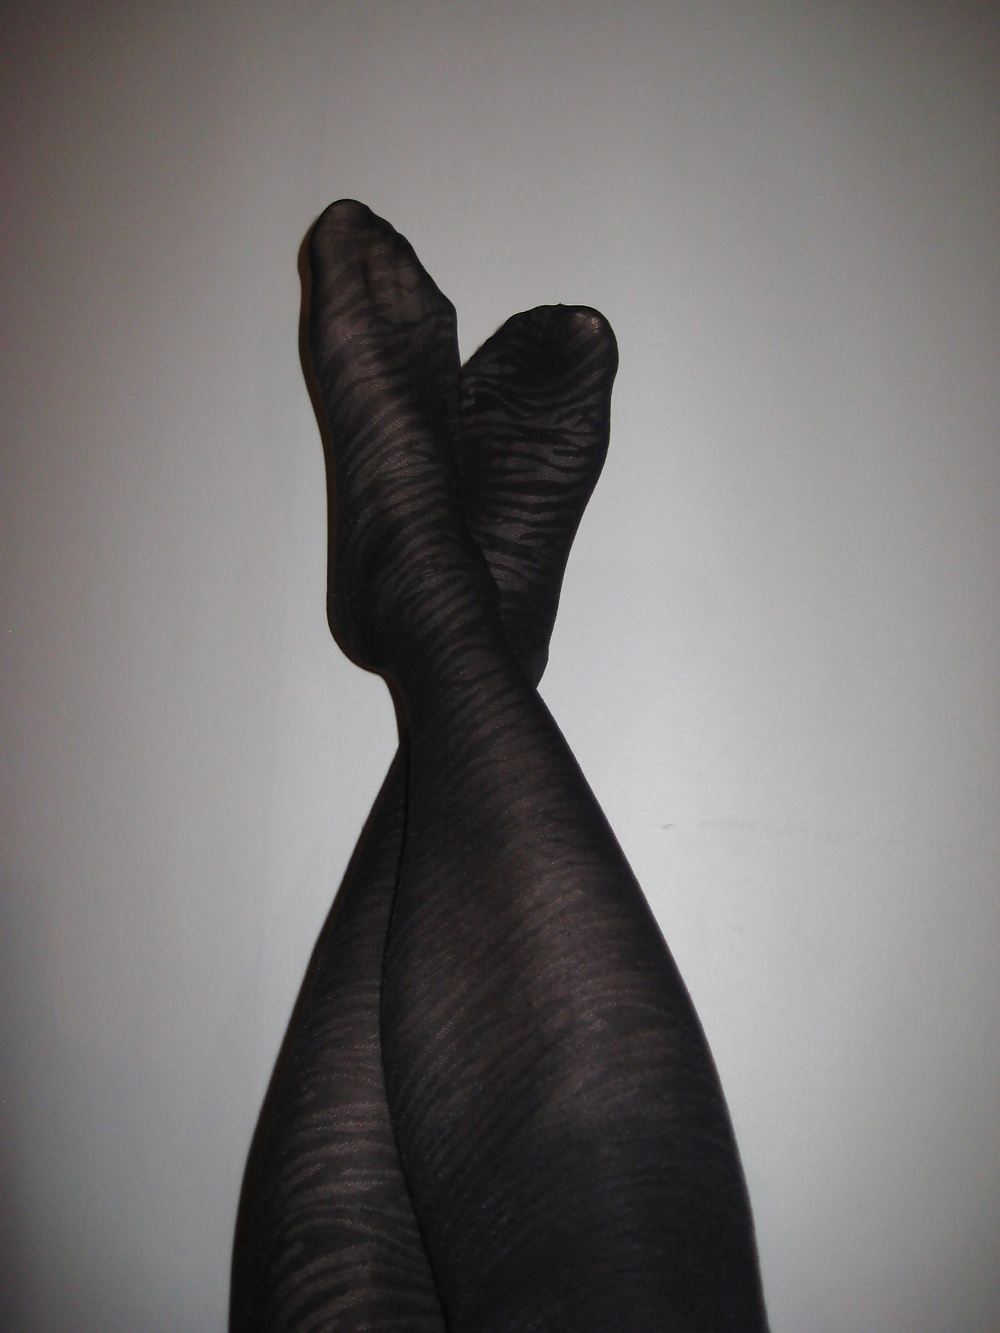 Hot stockings